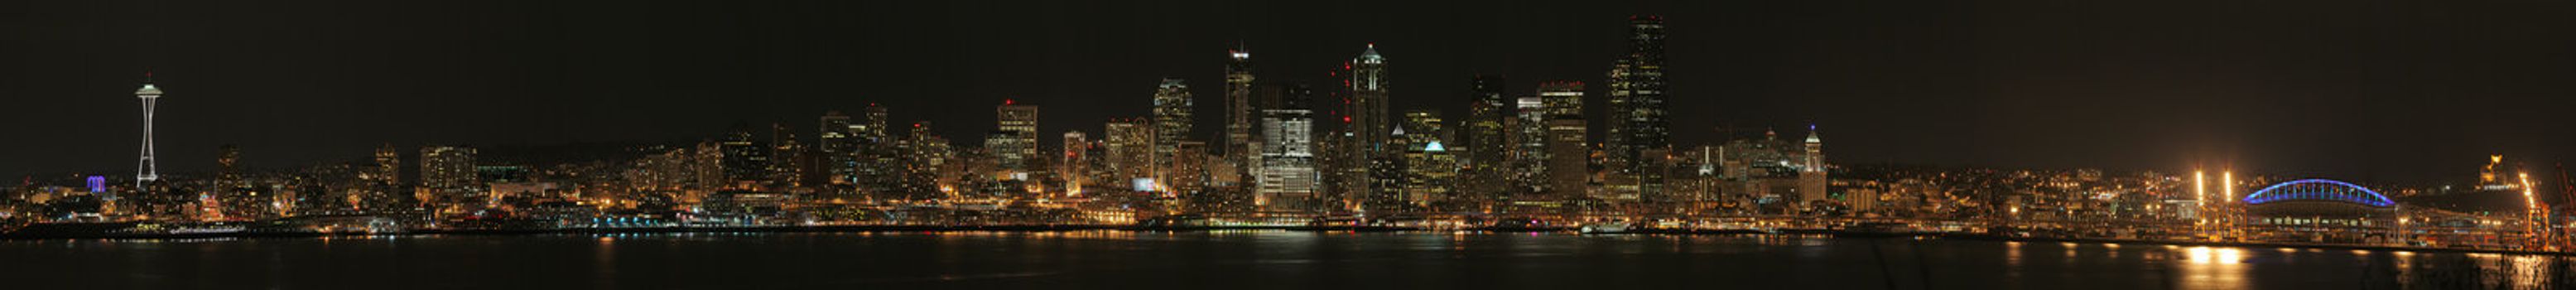 Panorama of Seattle at night, United States